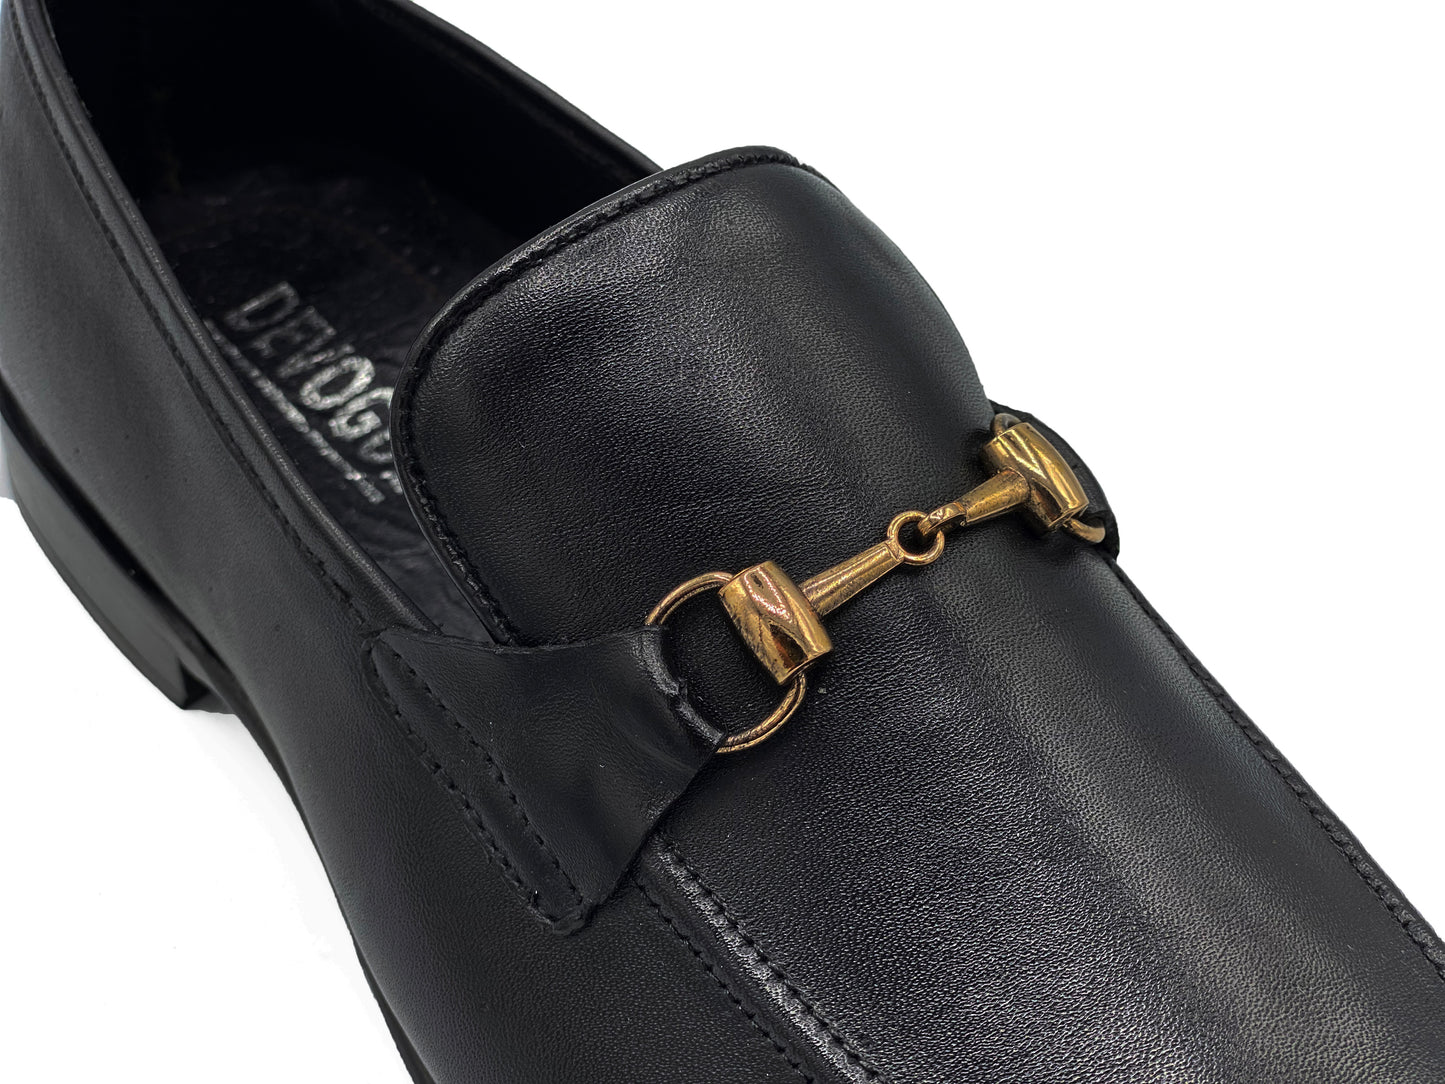 SKU:4001-Black Cow Leather Formal Loafer Style